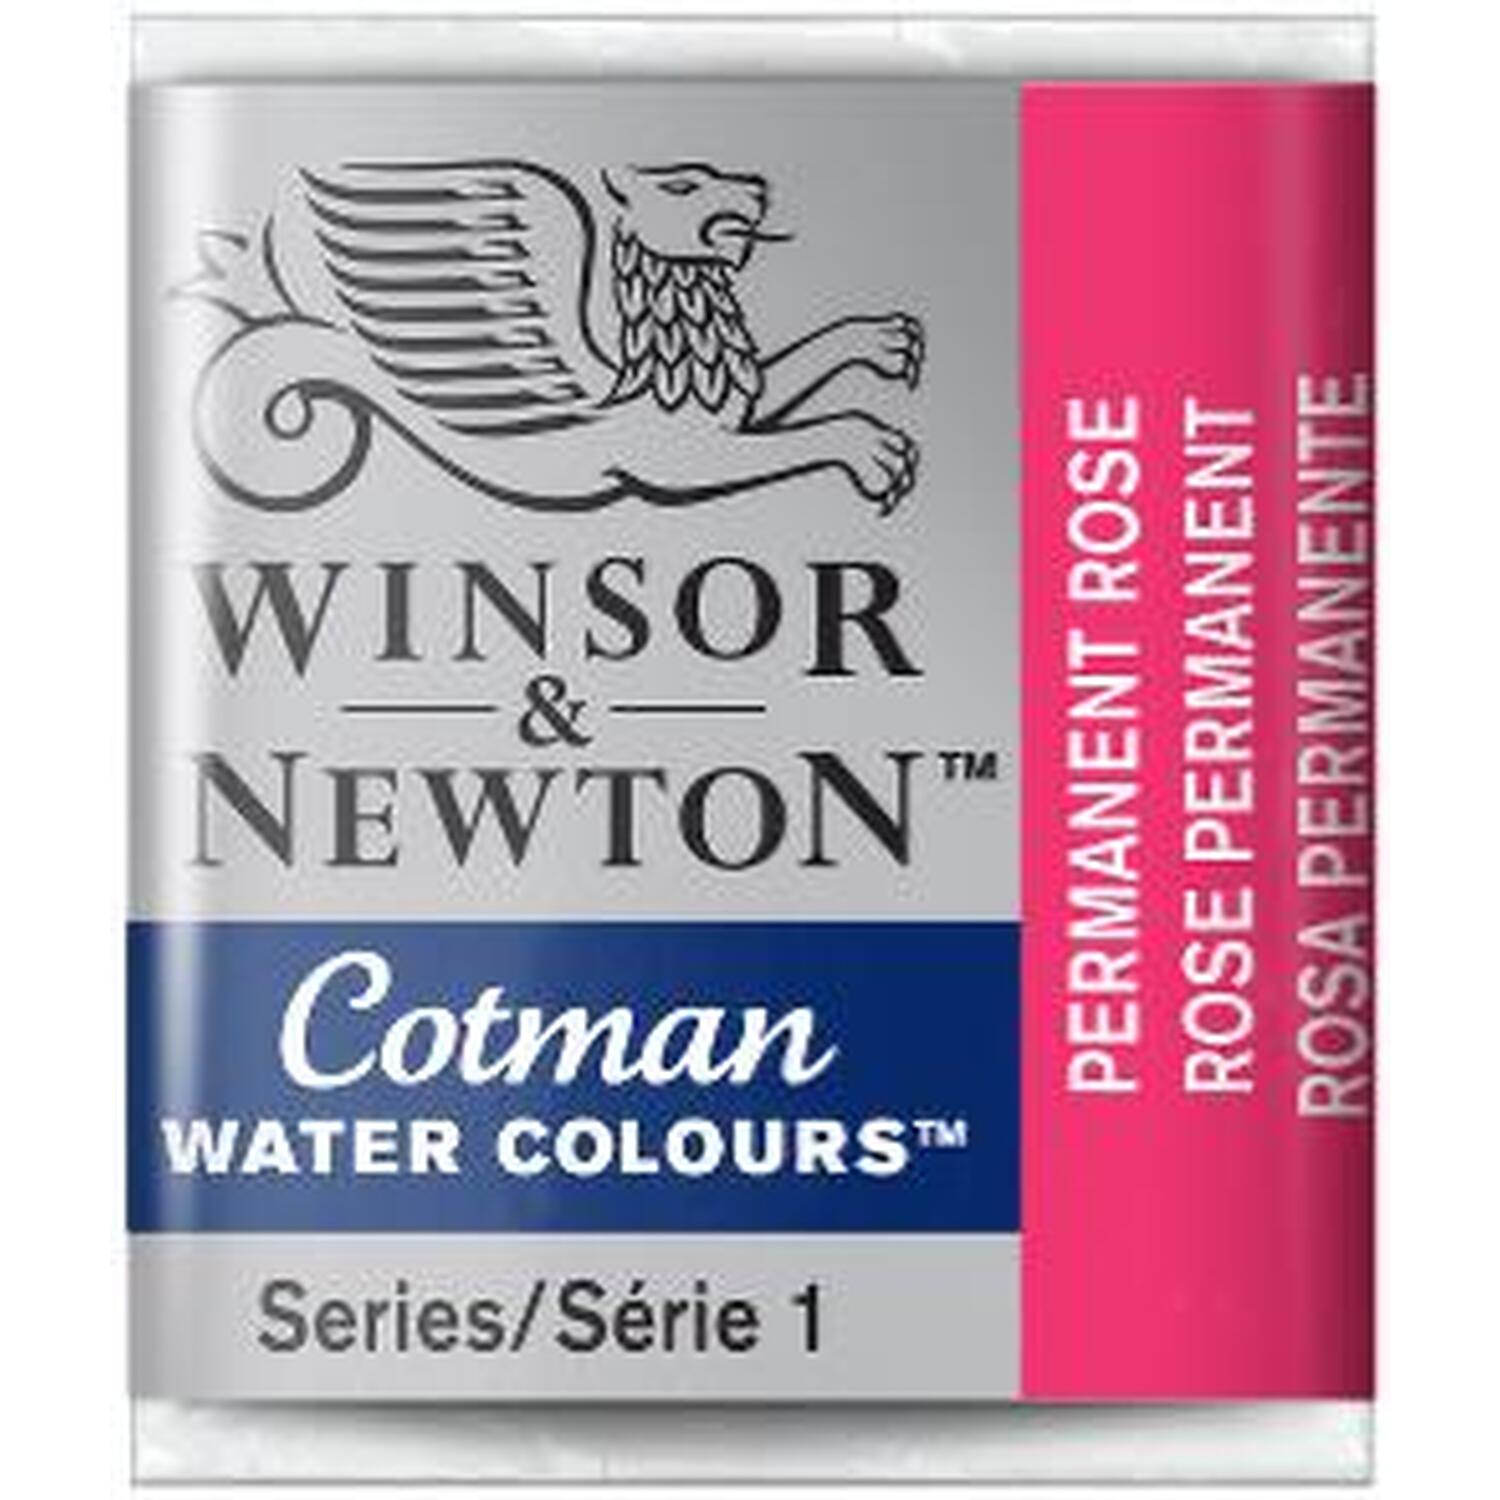 Winsor and Newton Cotman Watercolour Half Pan Paint - Permanent Rose Image